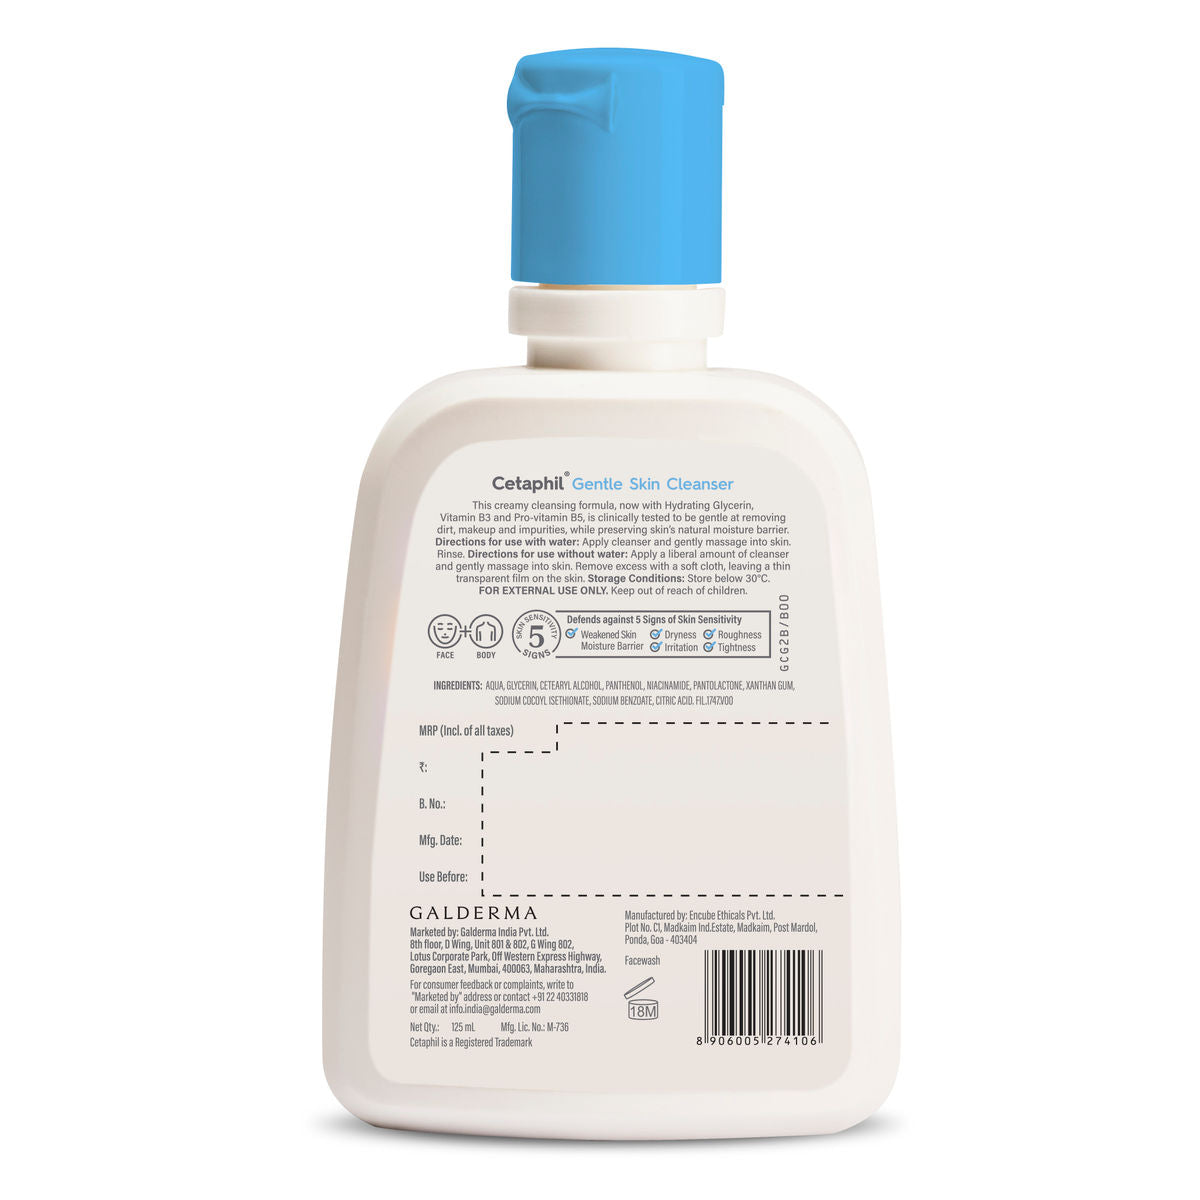 Cetaphil Gentle Skin Cleanser (125 ml) Cetaphil